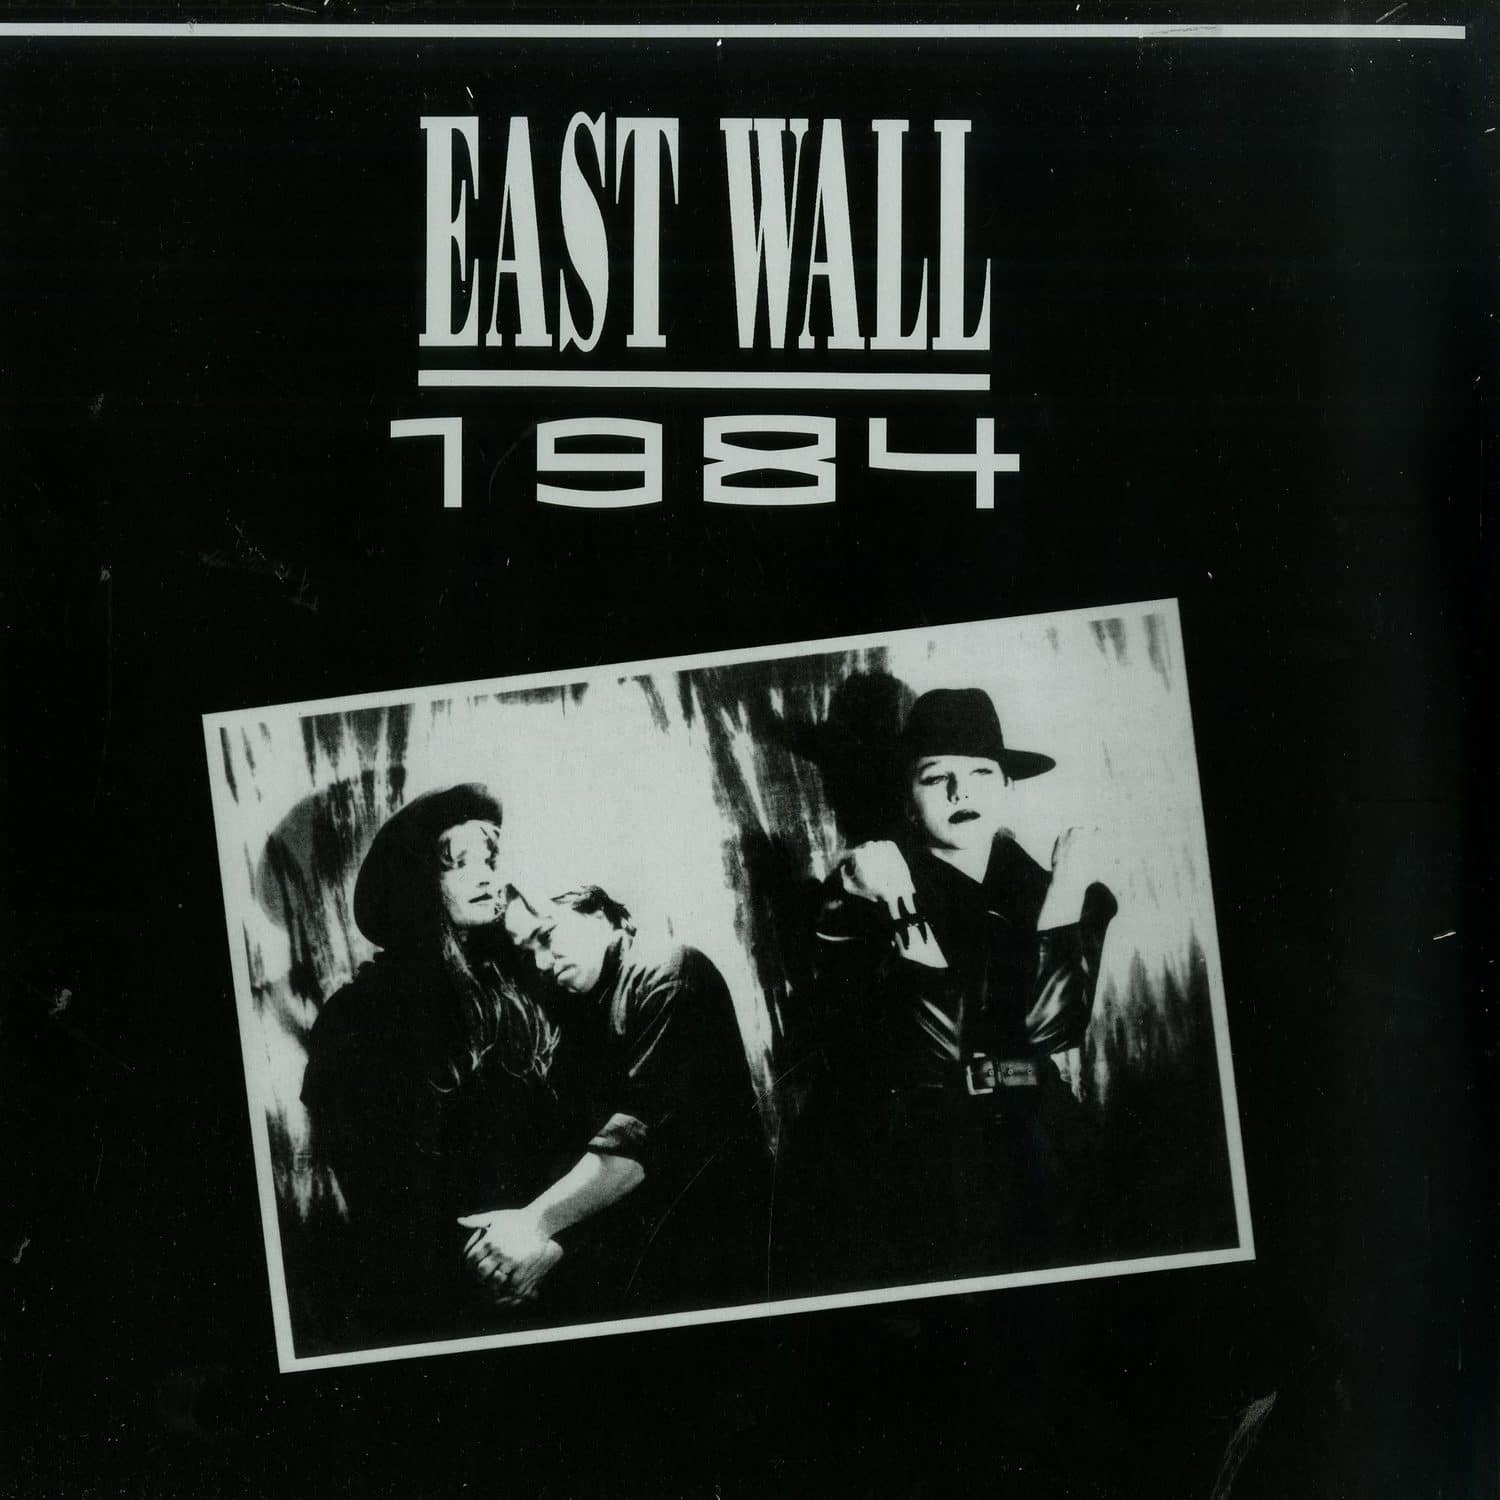 East Wall - 1984